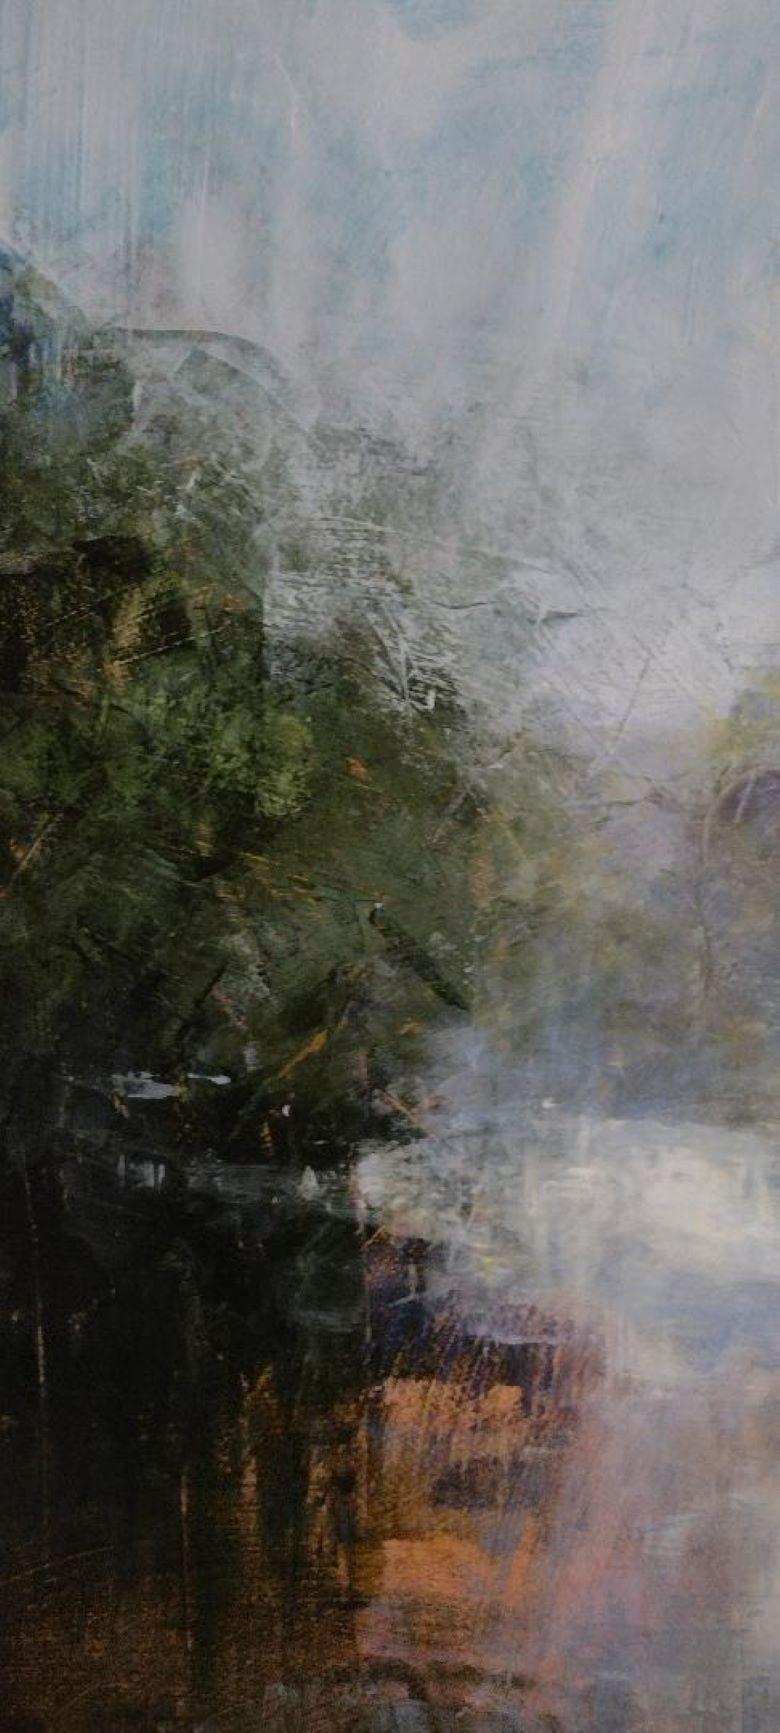 blurred oil paintings